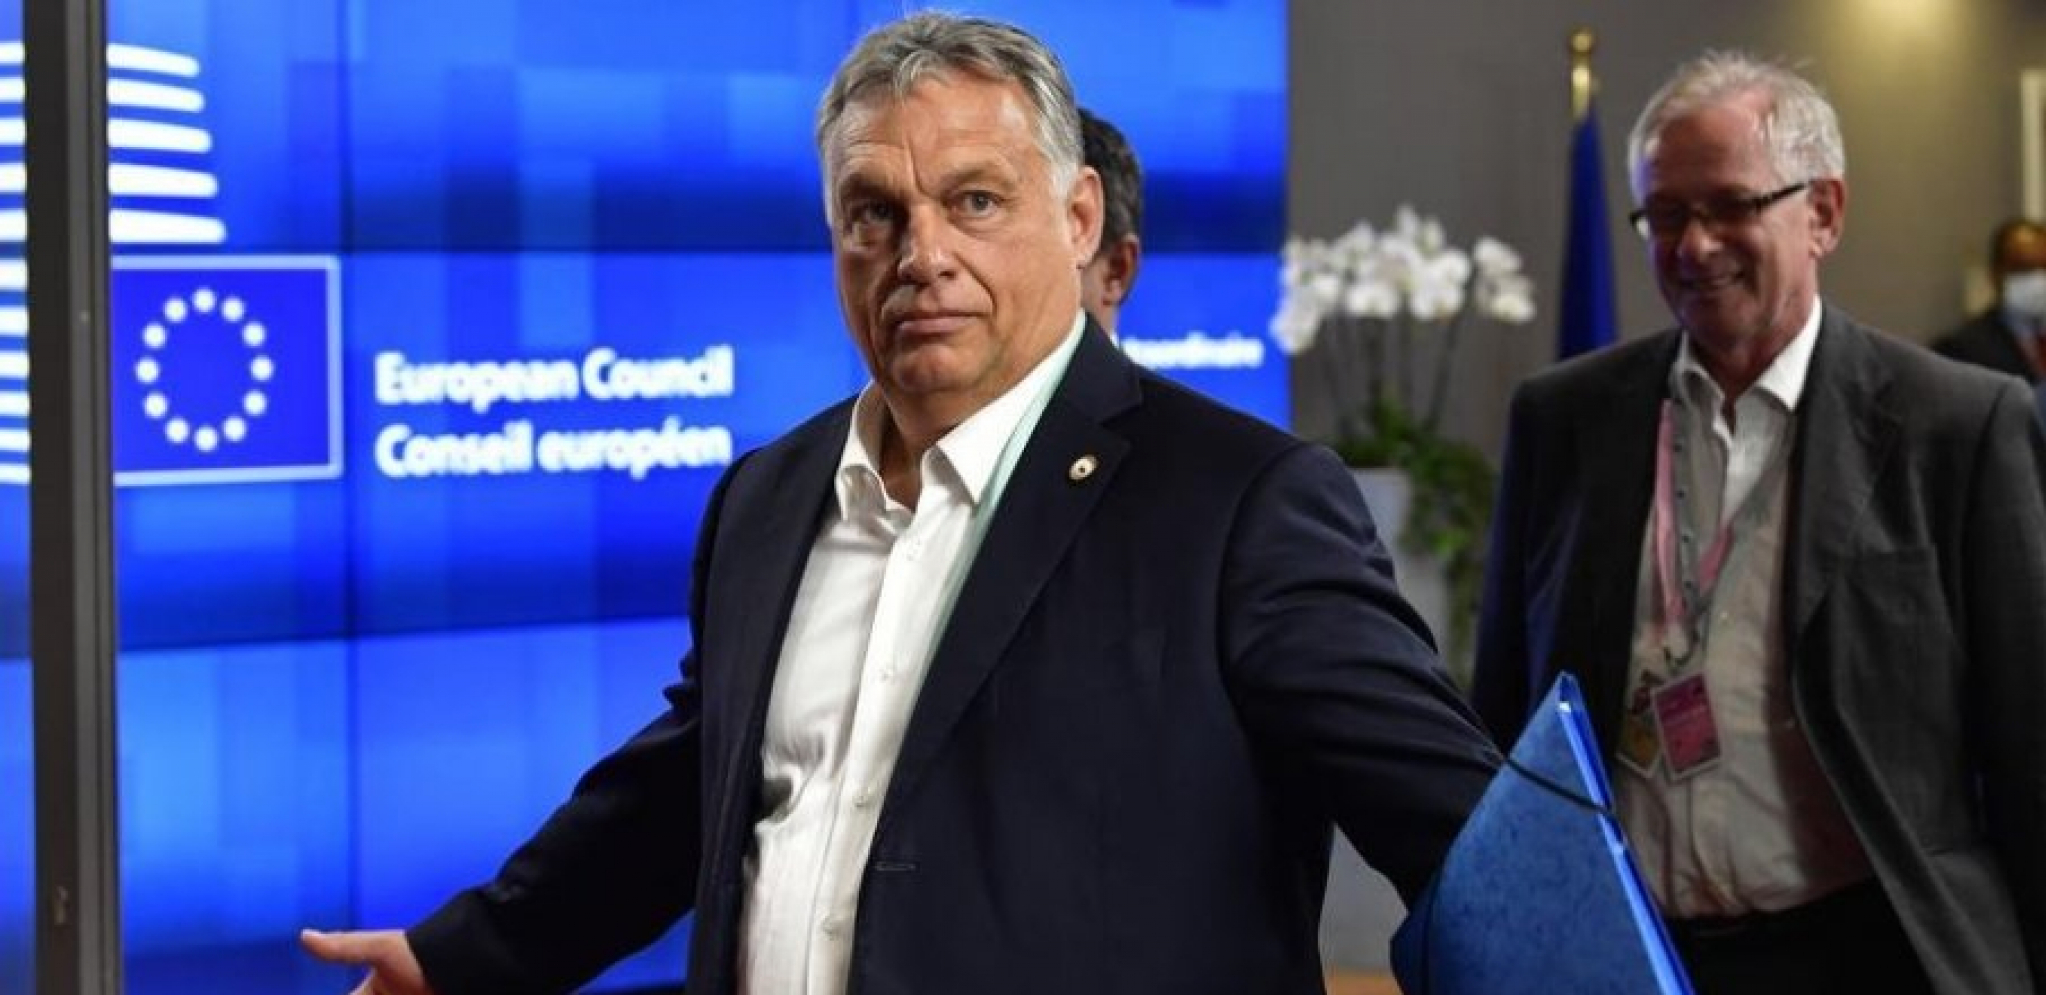 USPELI SMO Viktor Orban upozorio Evropu, pa saopštio sjajne vesti za svoj narod